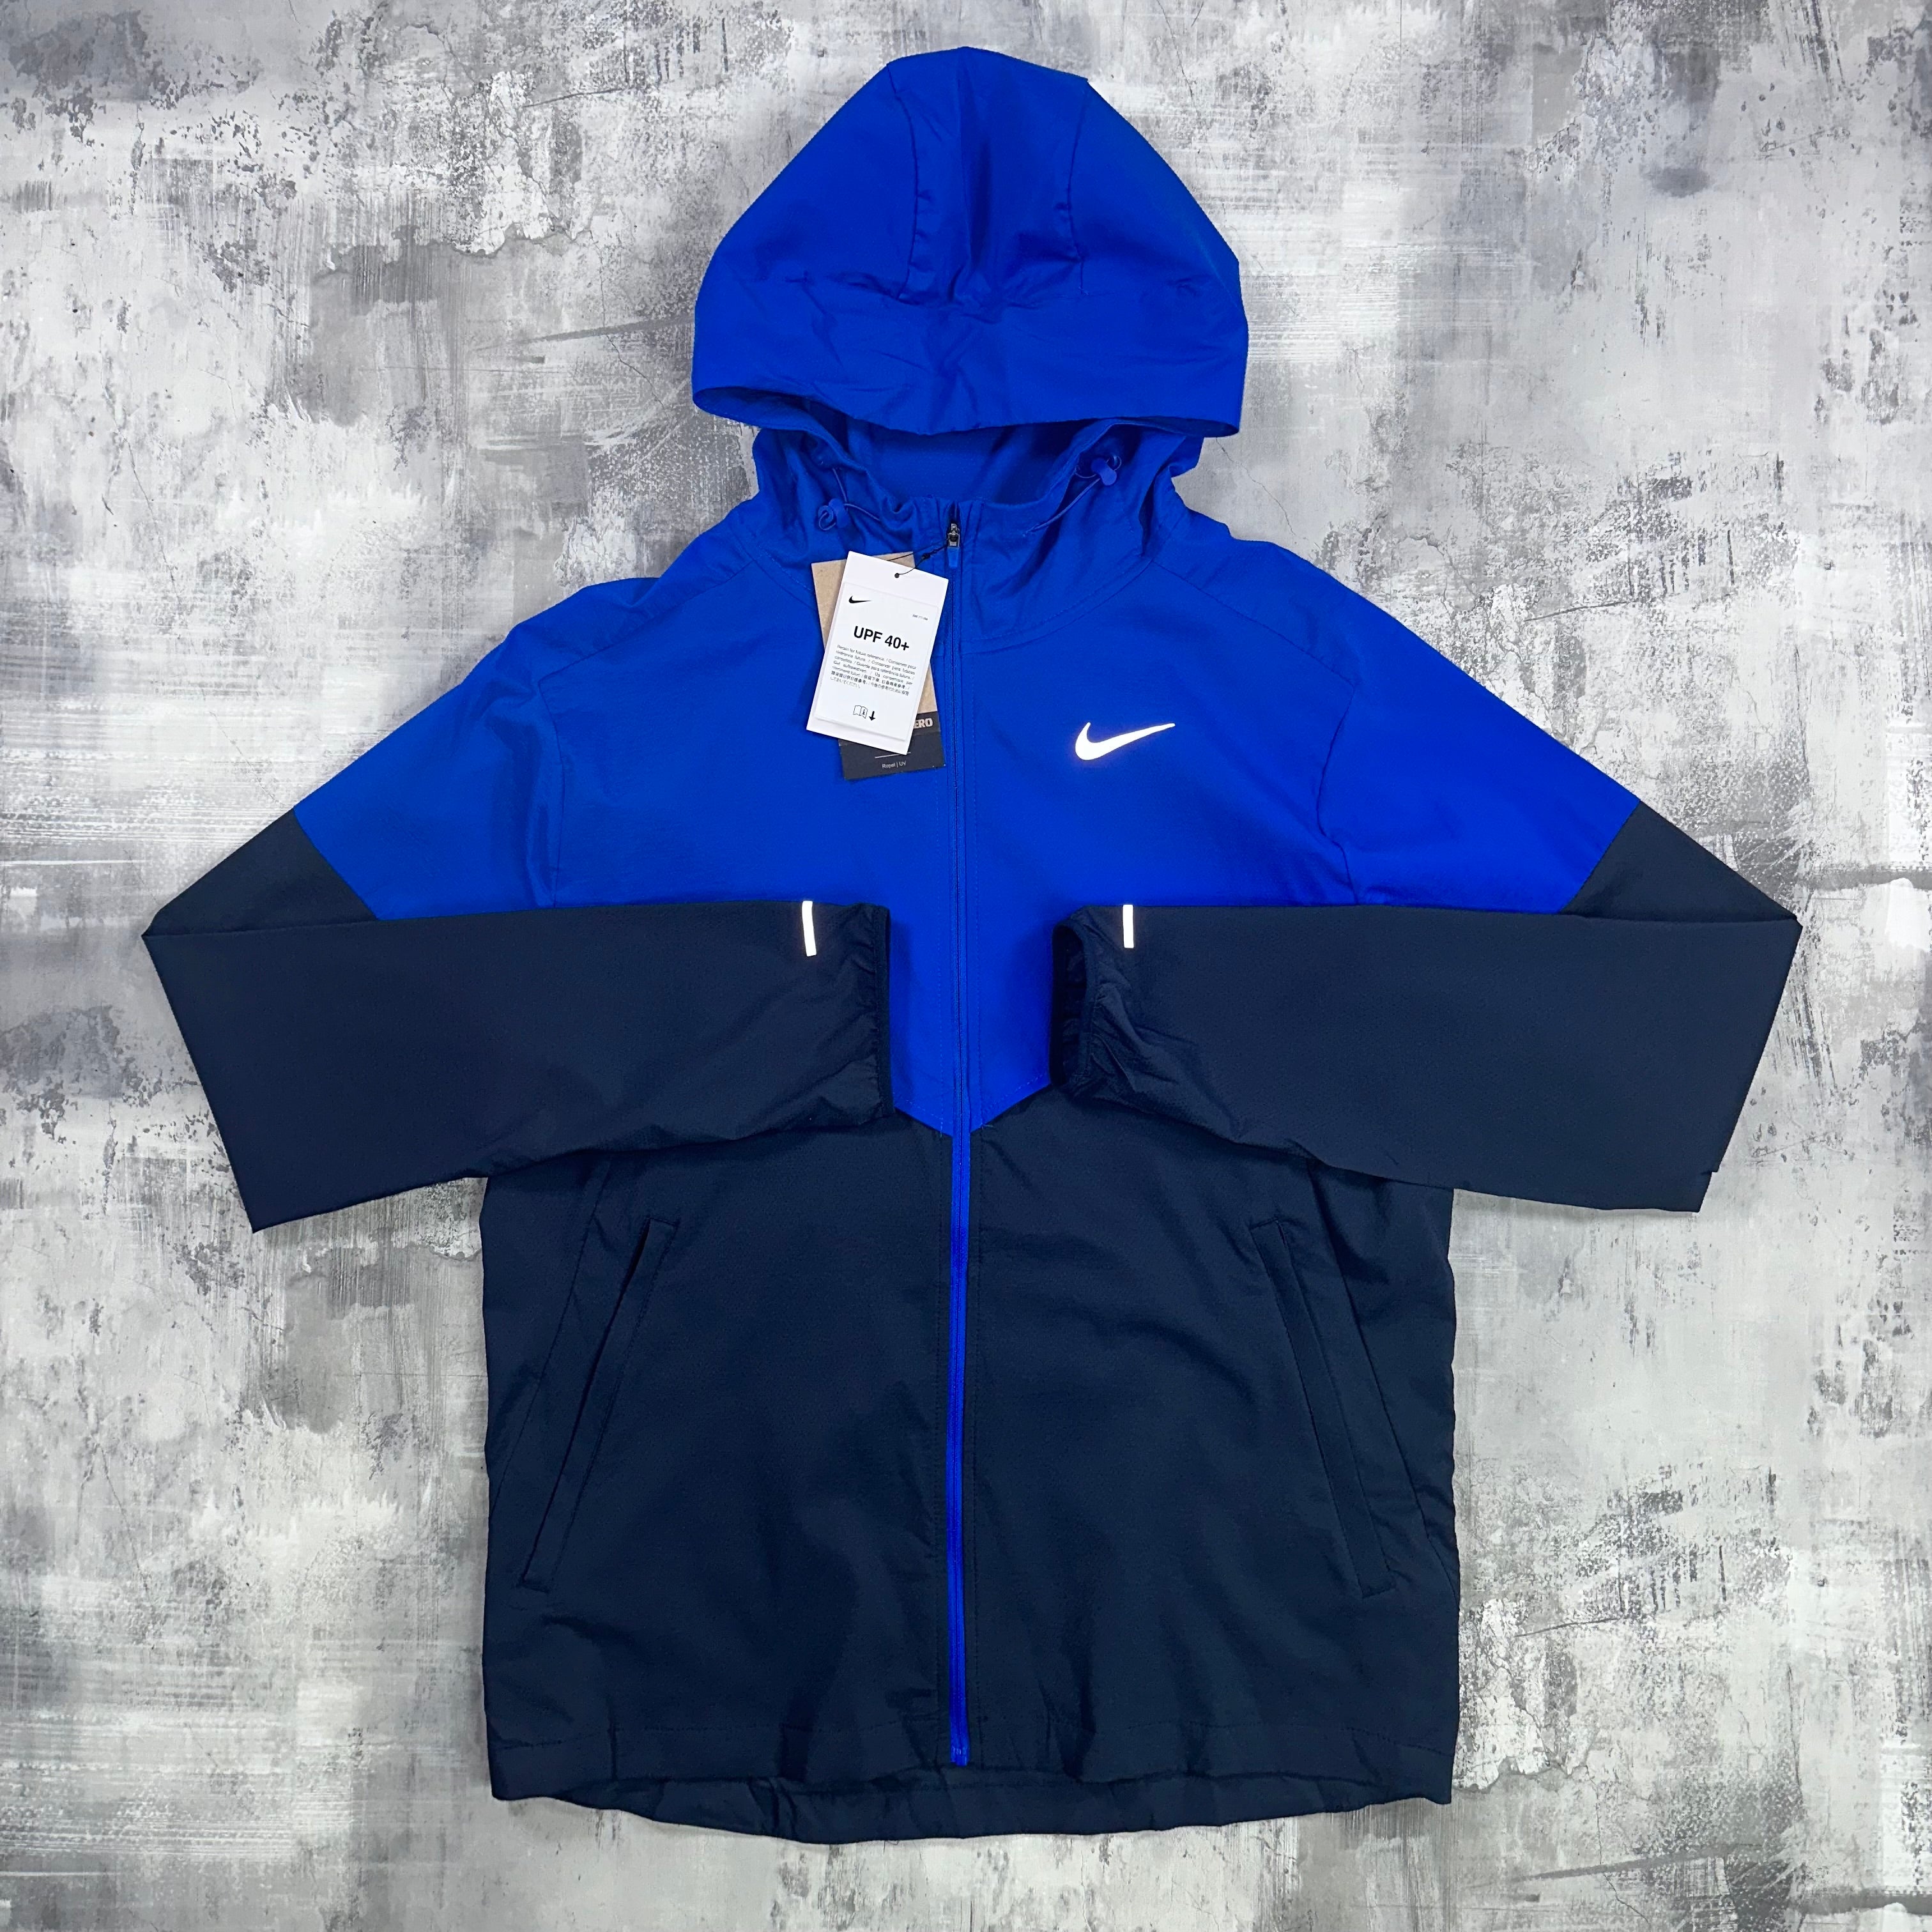 Nike windrunner jacket Royal Blue